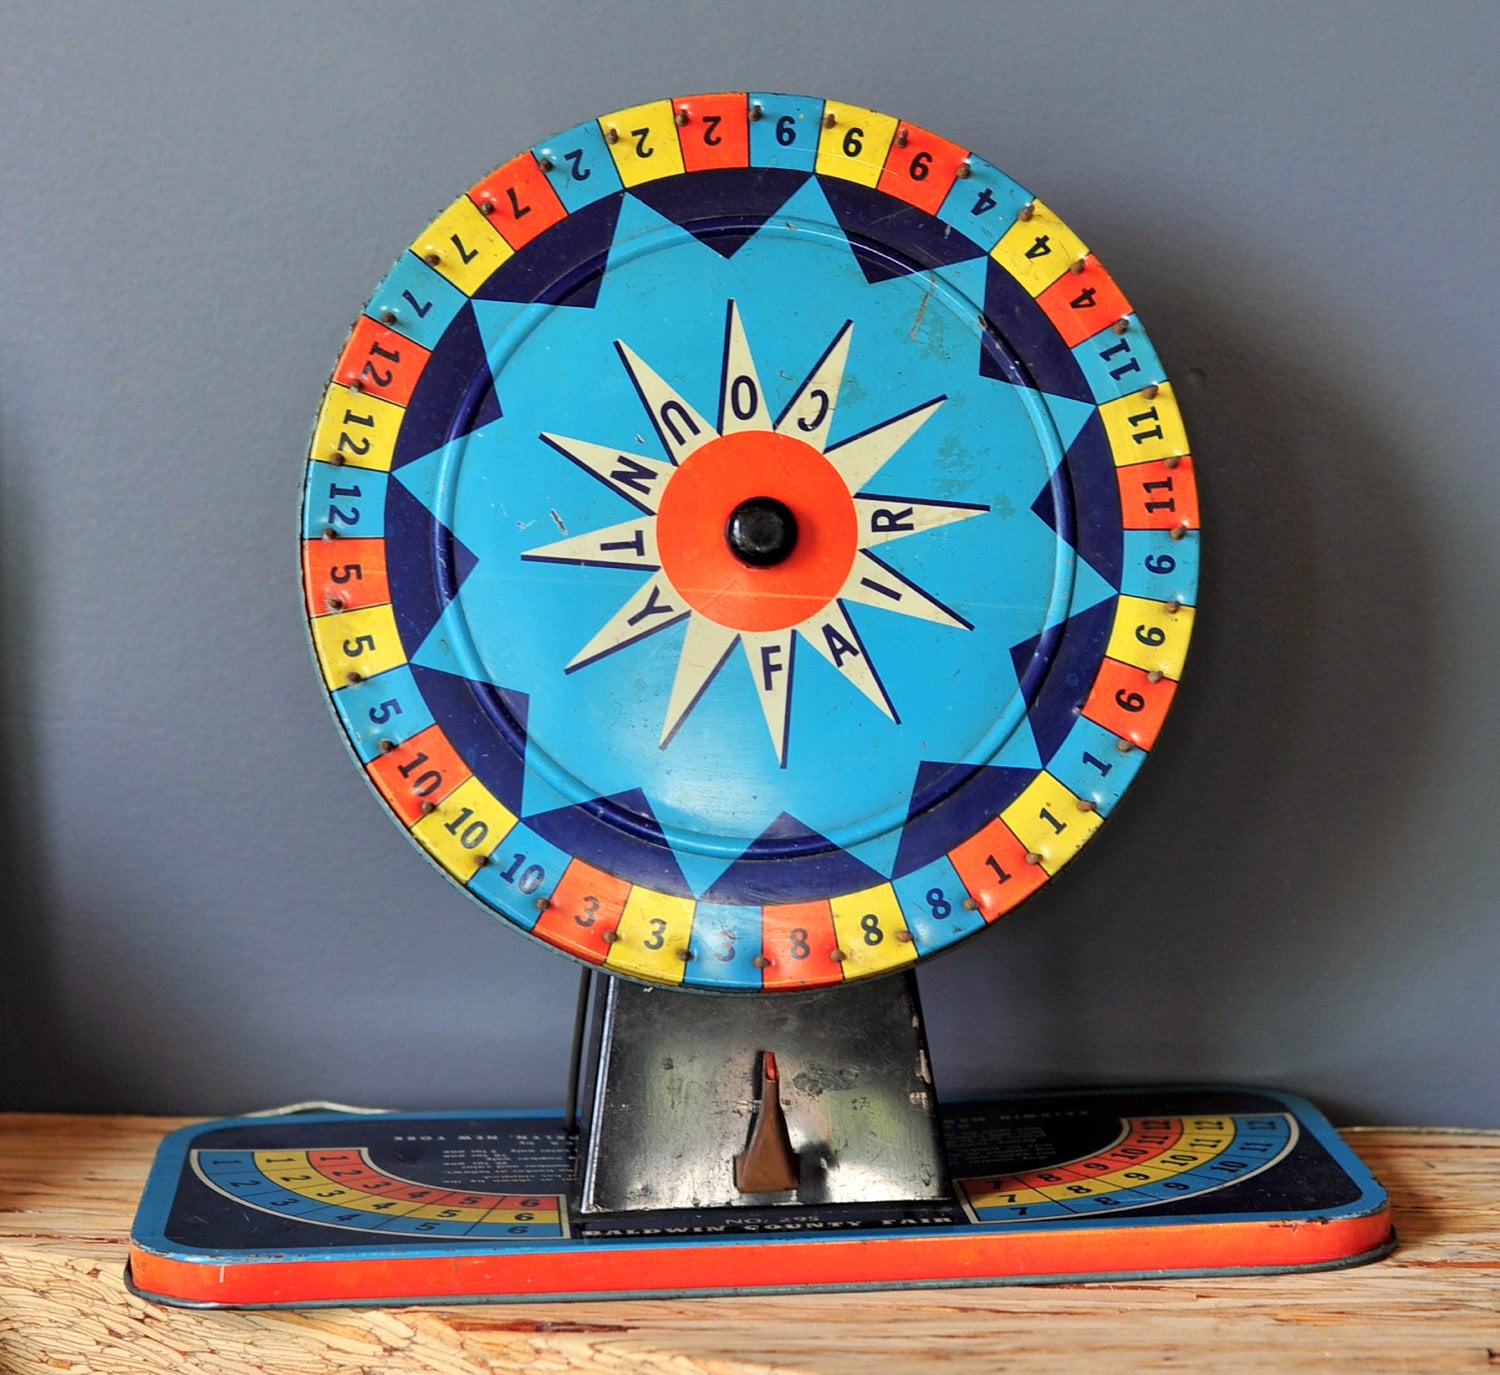 Roulette wheel spinning video